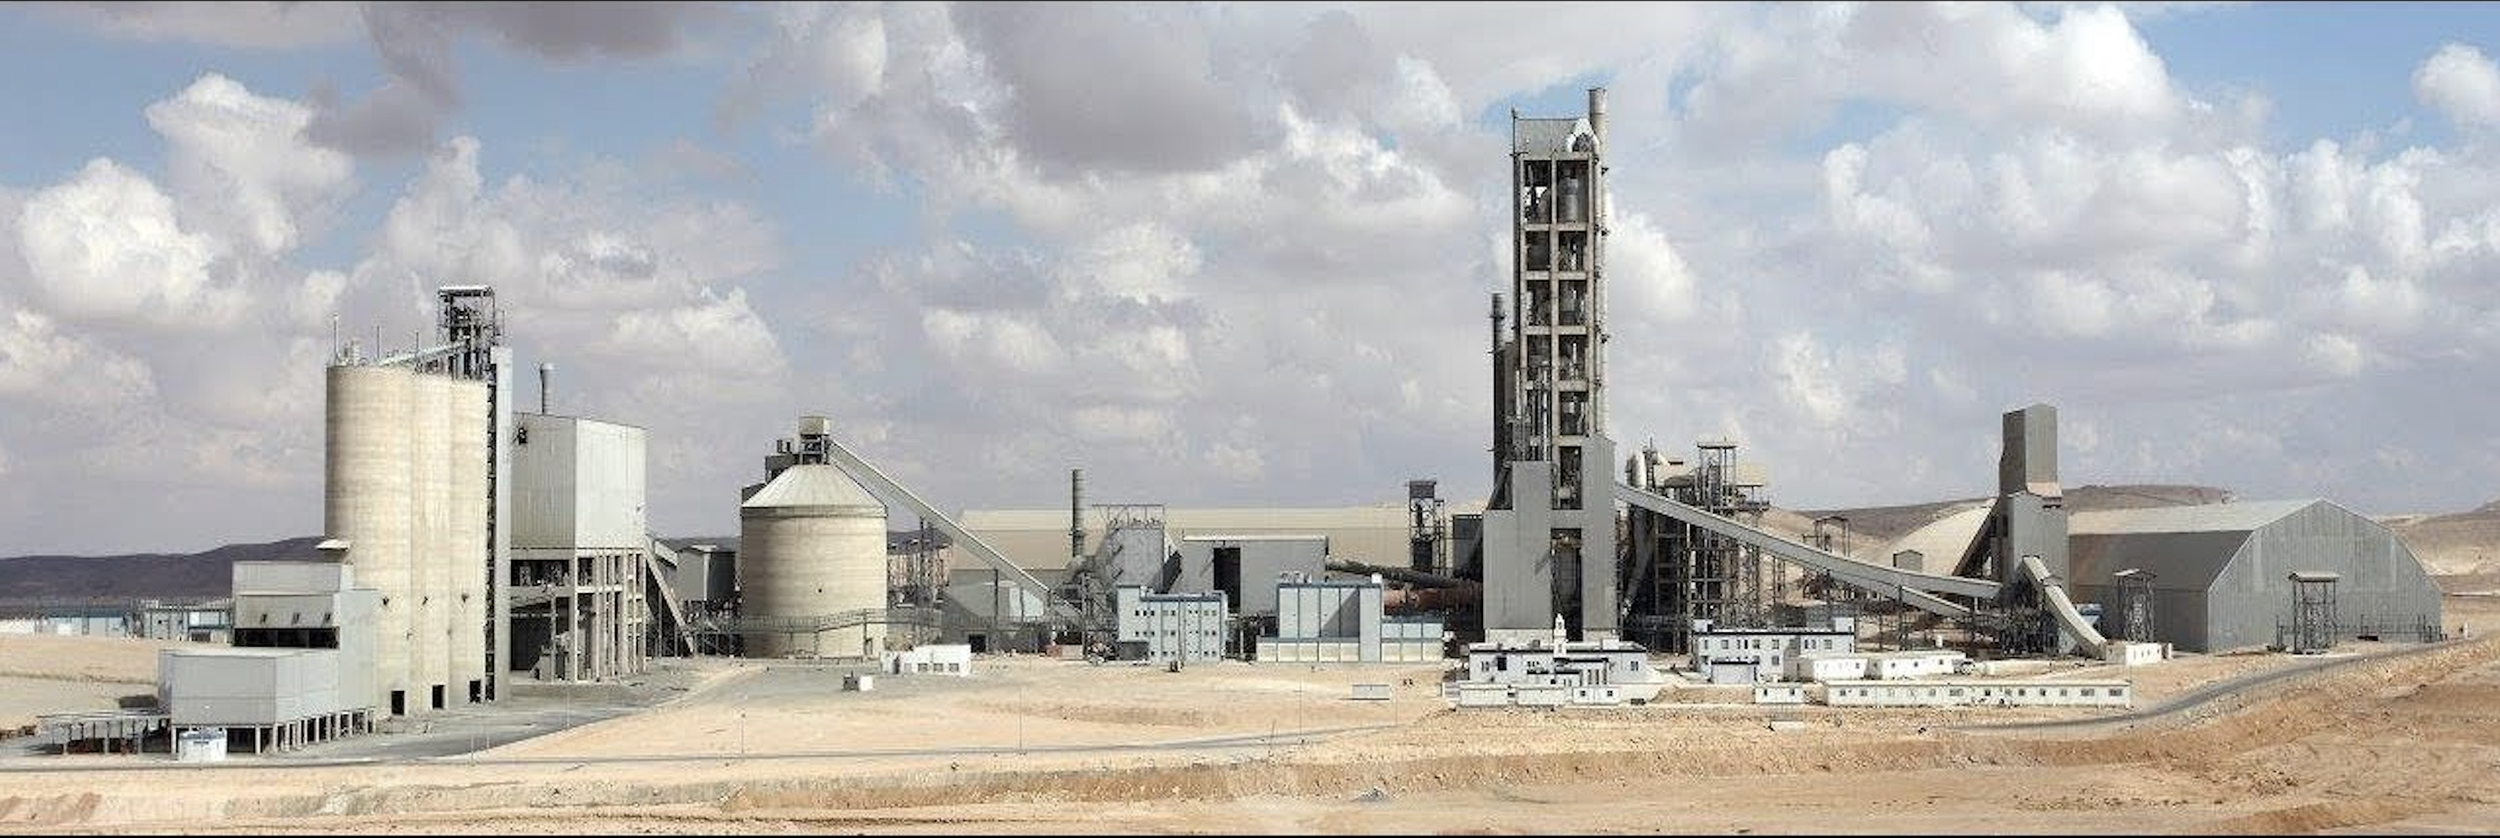 Qatraneh Cement Plant - Jordan.png